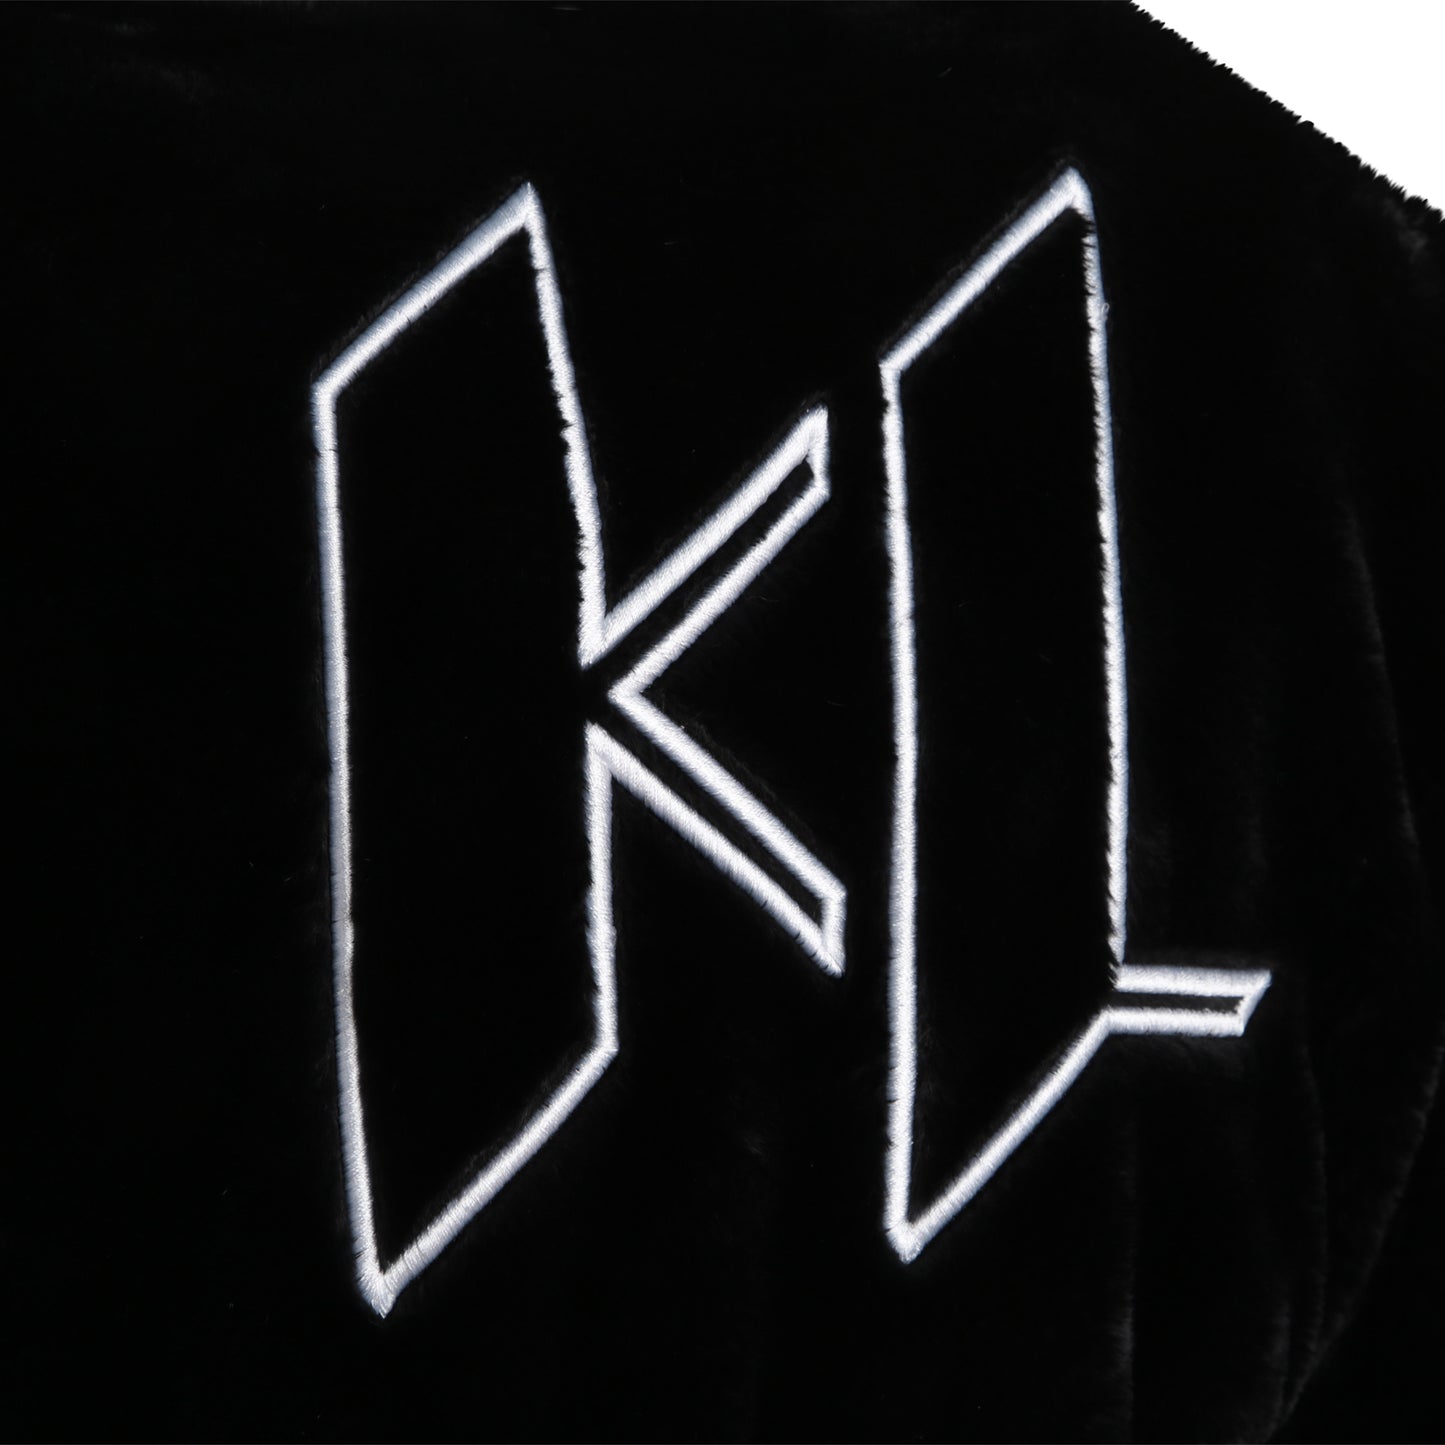 Karl Lagerfeld Long Fluffy Polar Jacket w/ Back Logo Embroidery